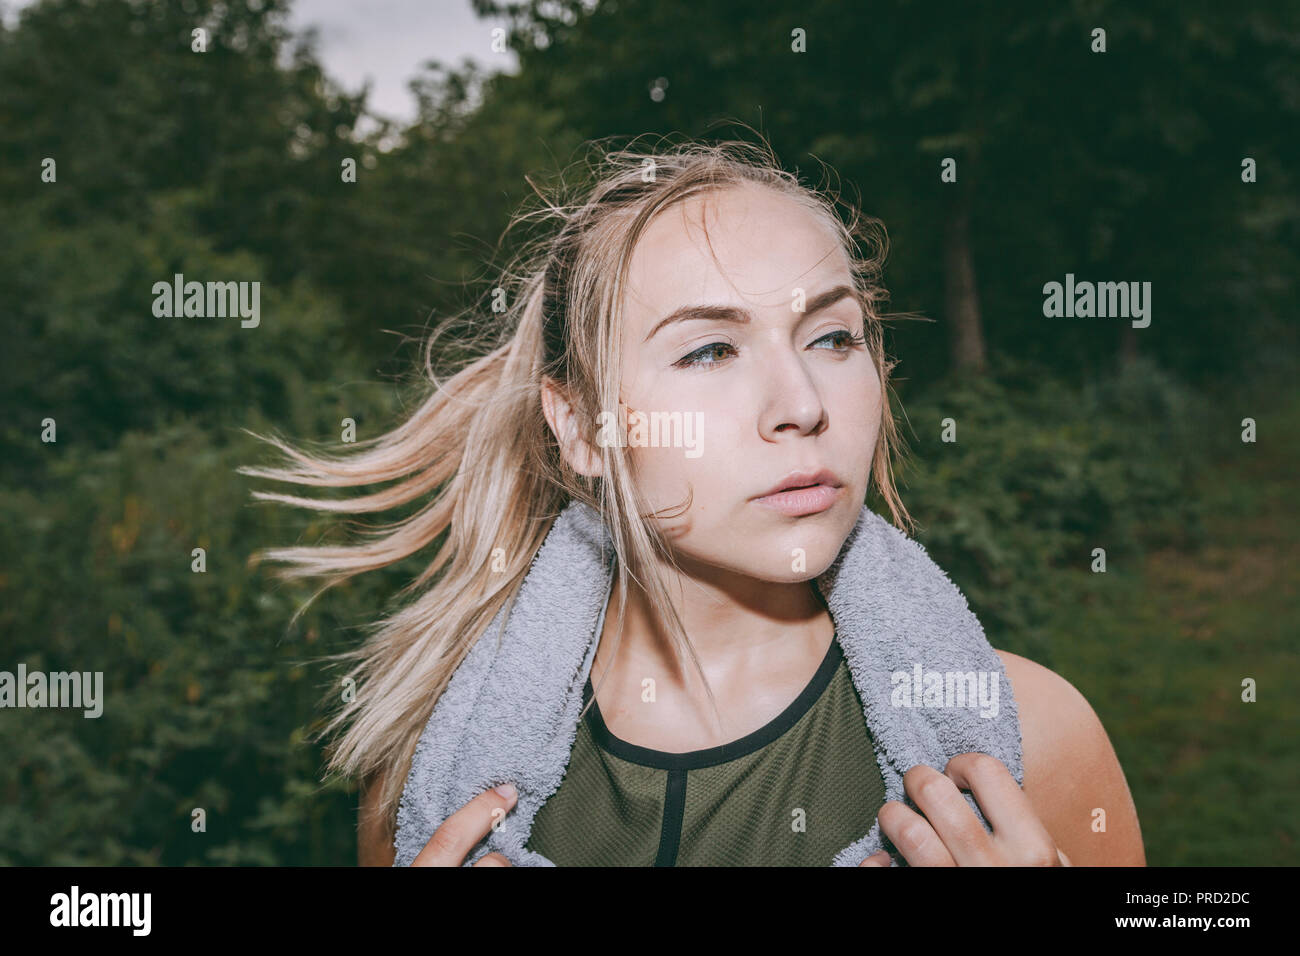 Blond sport Frau joggt in Park Stockfoto